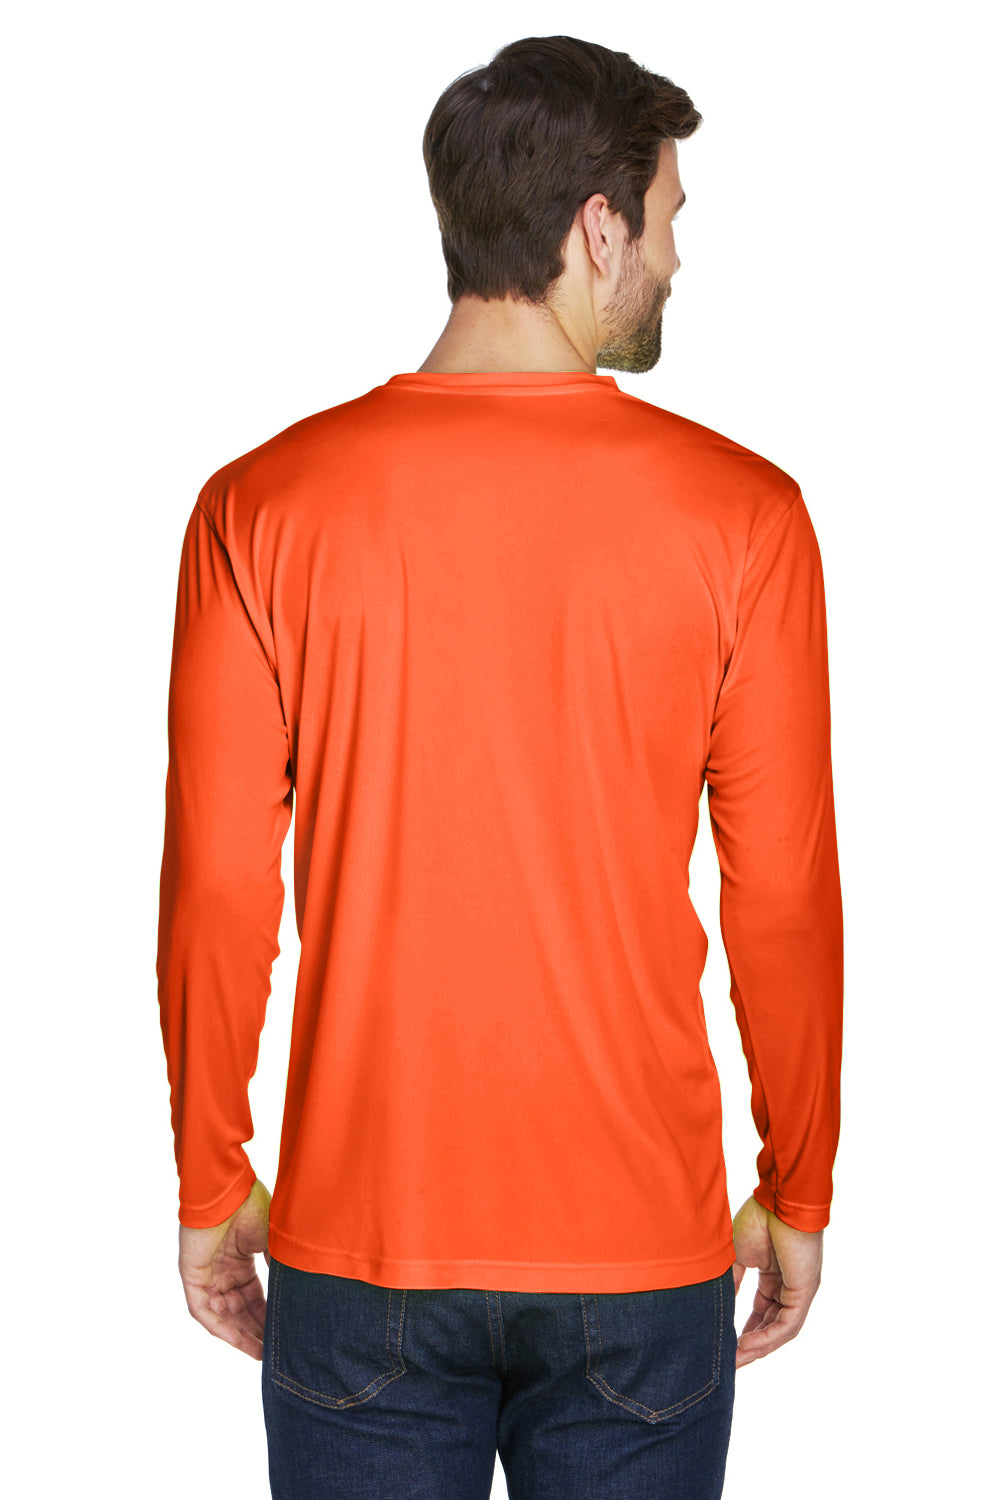 UltraClub 8422 Mens Cool & Dry Performance Moisture Wicking Long Sleeve Crewneck T-Shirt Bright Orange Back